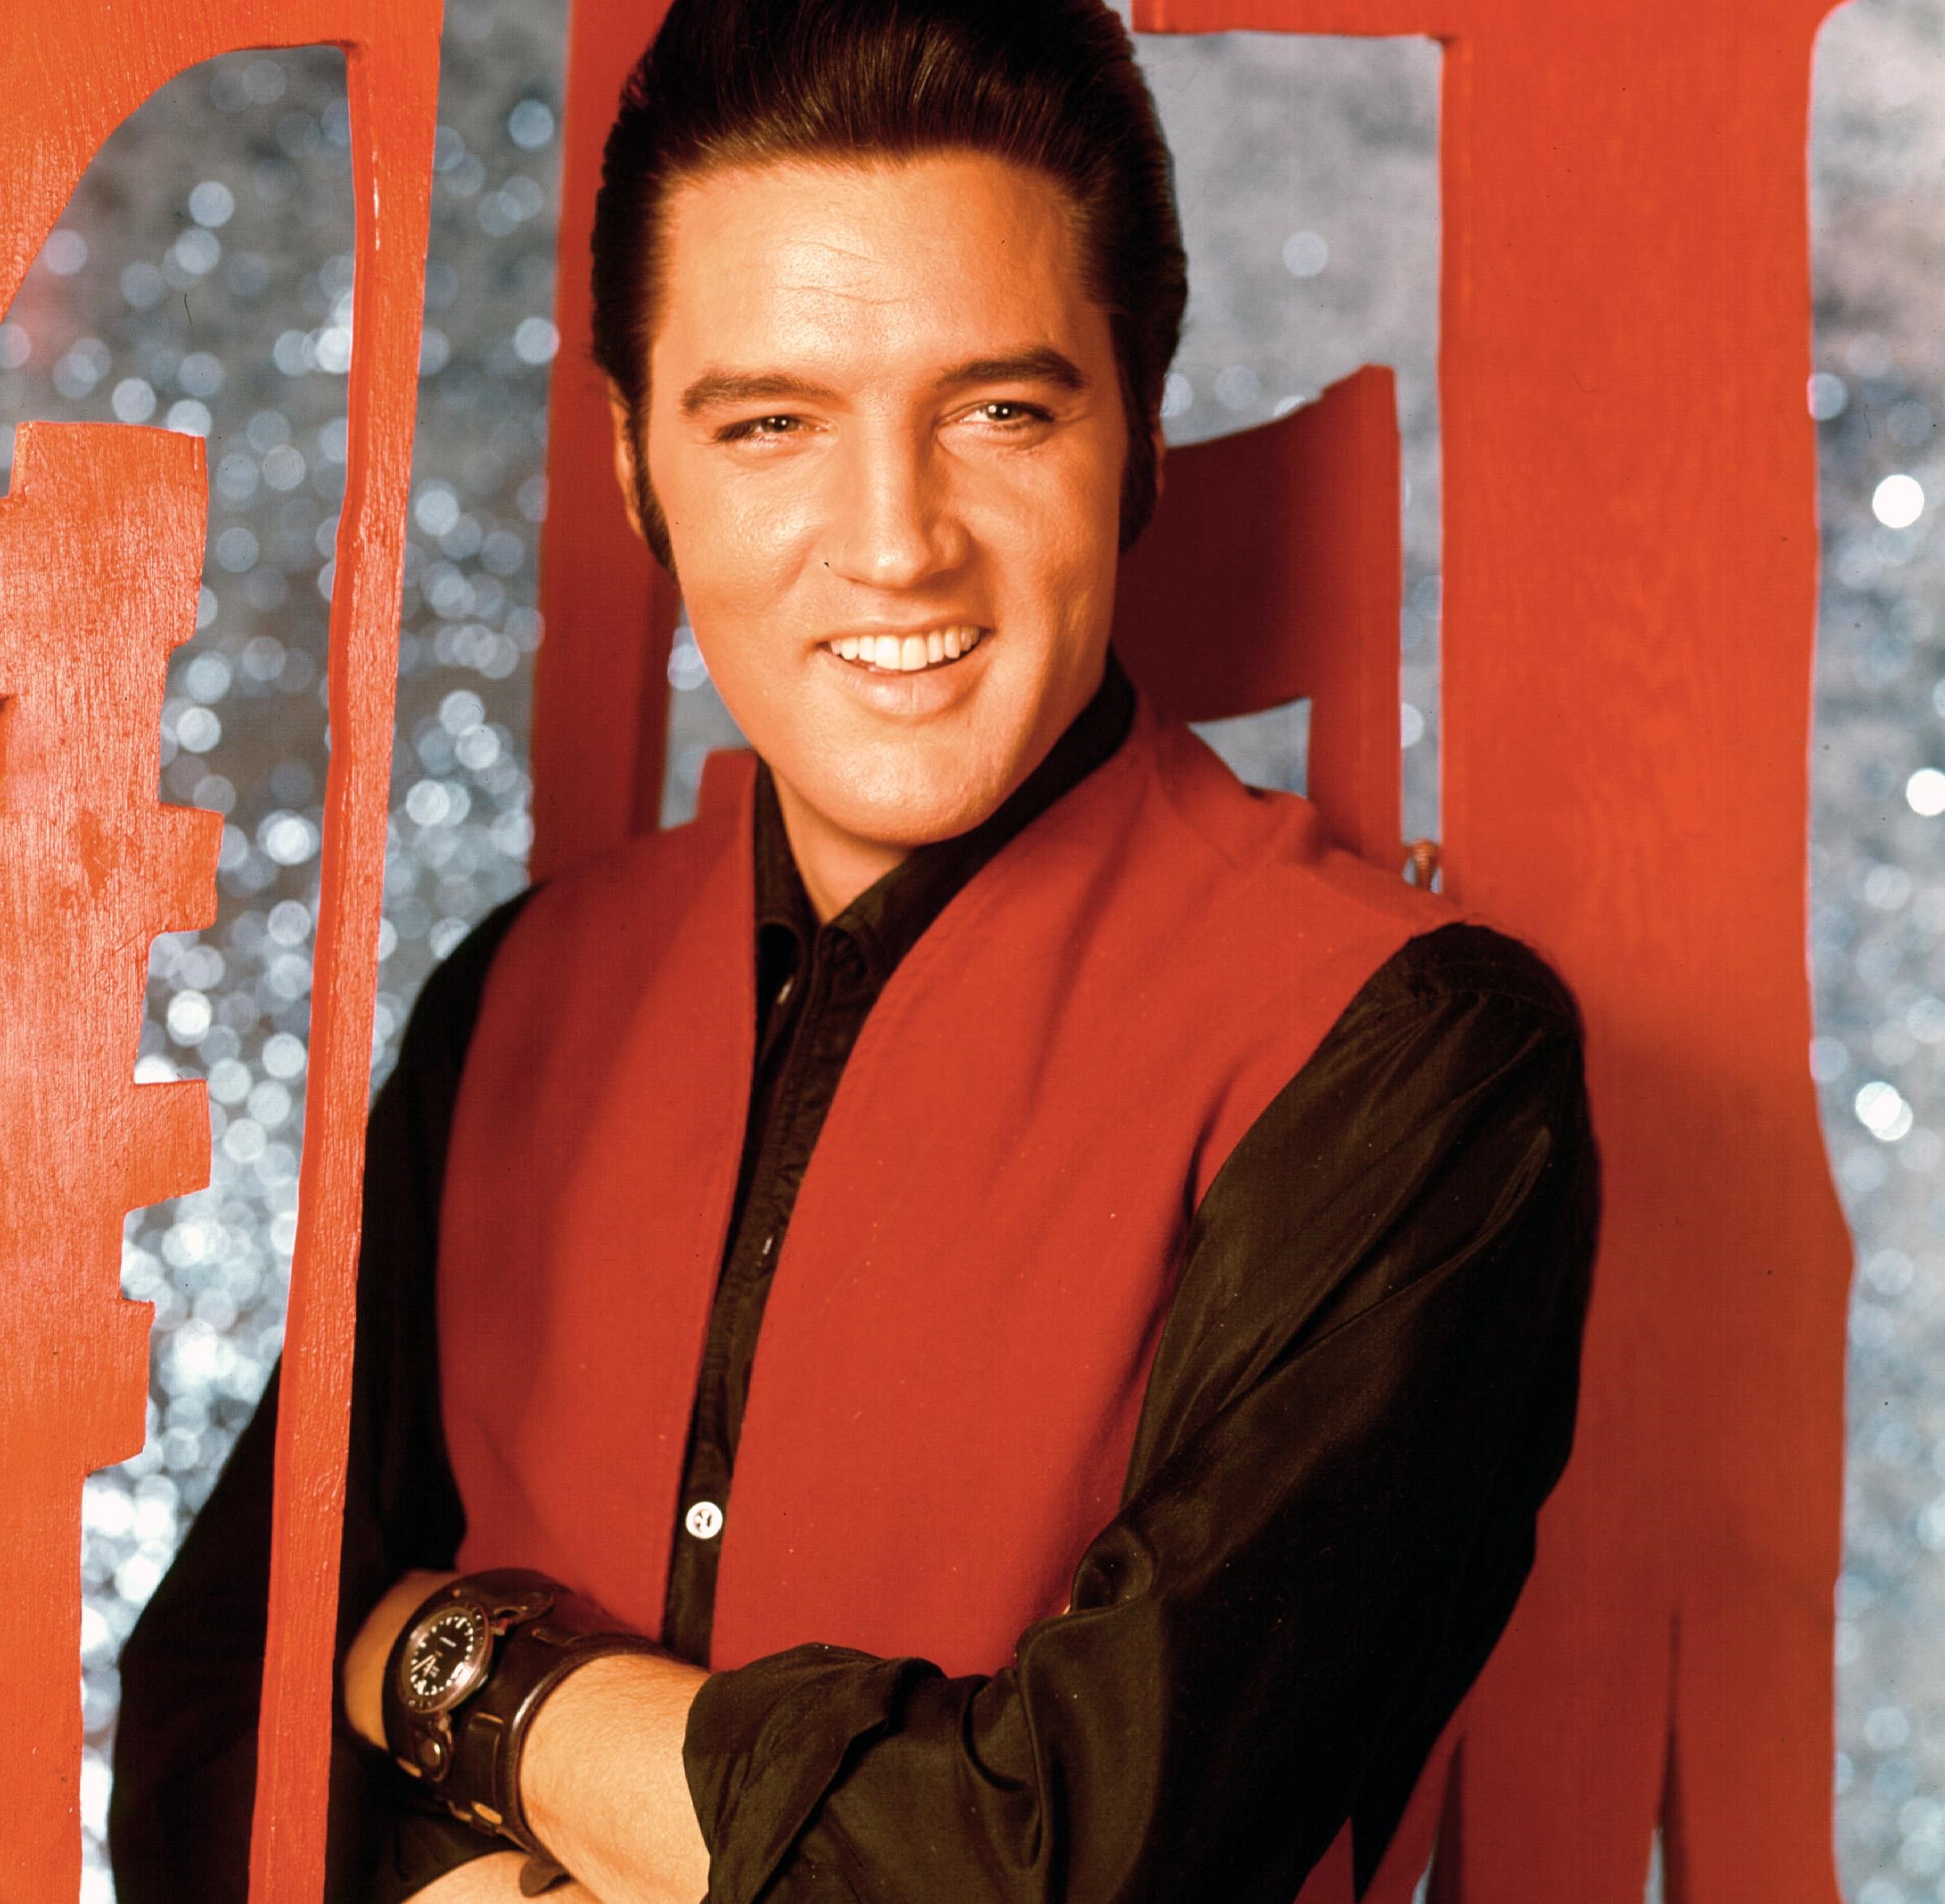 "Can't Help Falling in Love" singer Elvis Presley wearing red